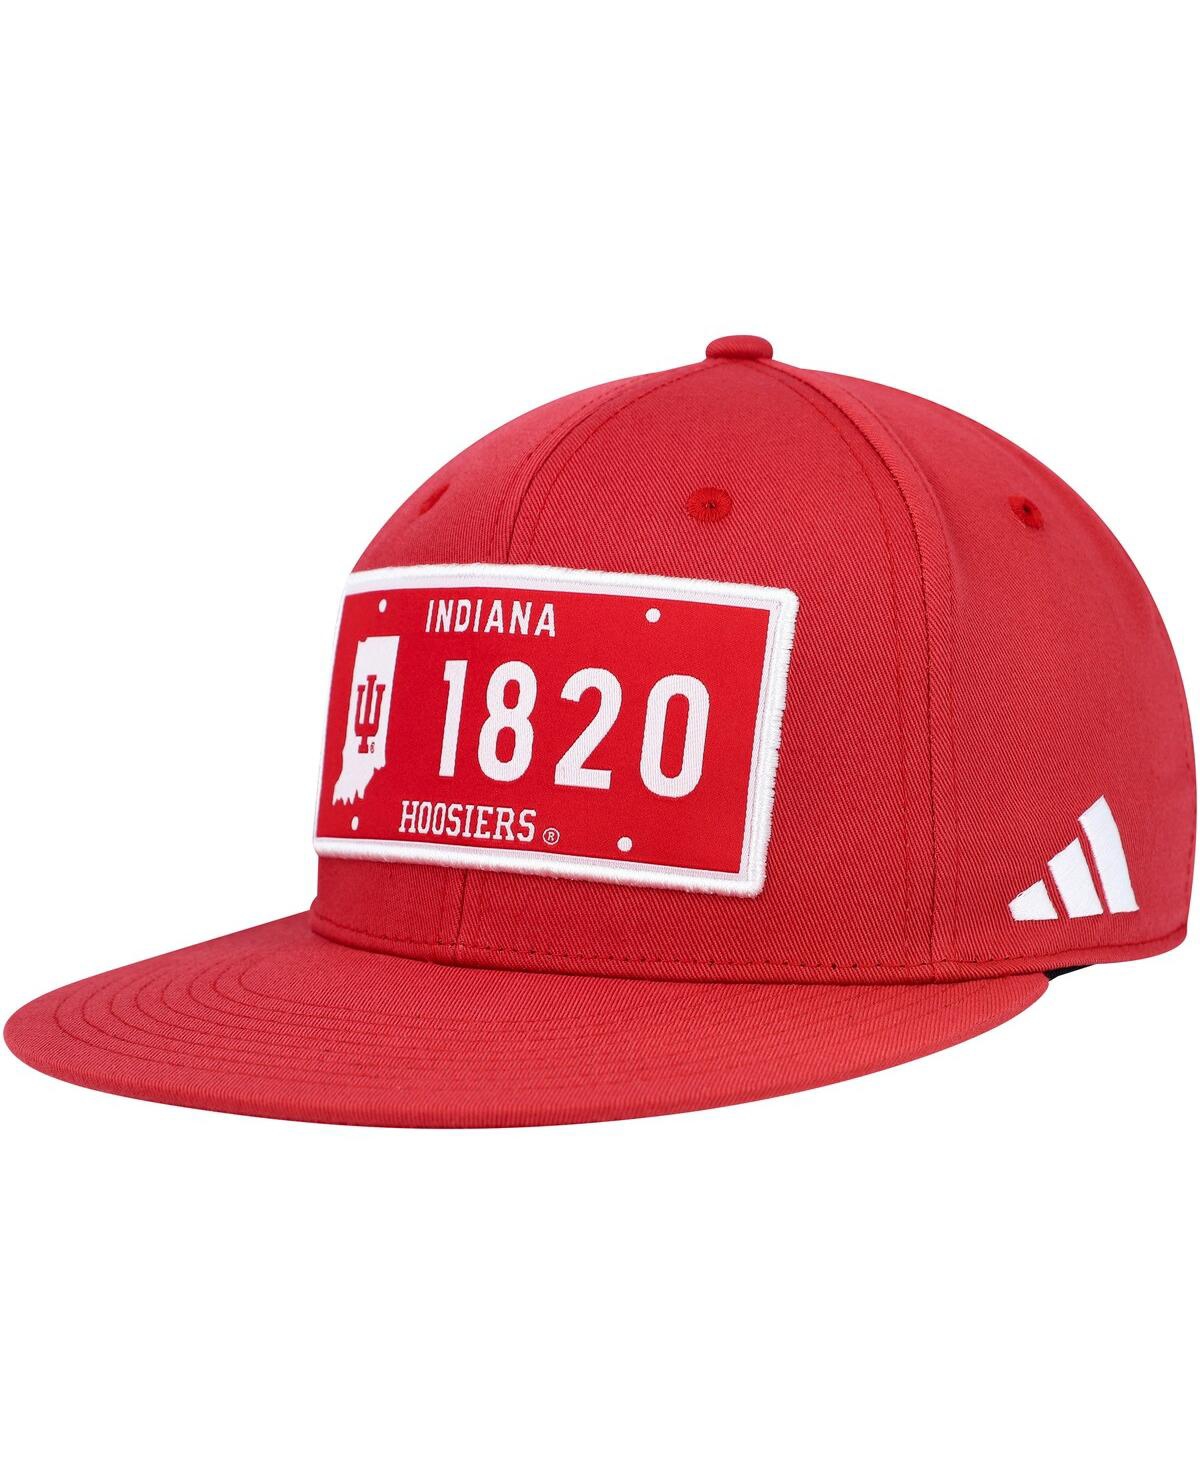 Shop Adidas Originals Men's Adidas Crimson Indiana Hoosiers Established Snapback Hat